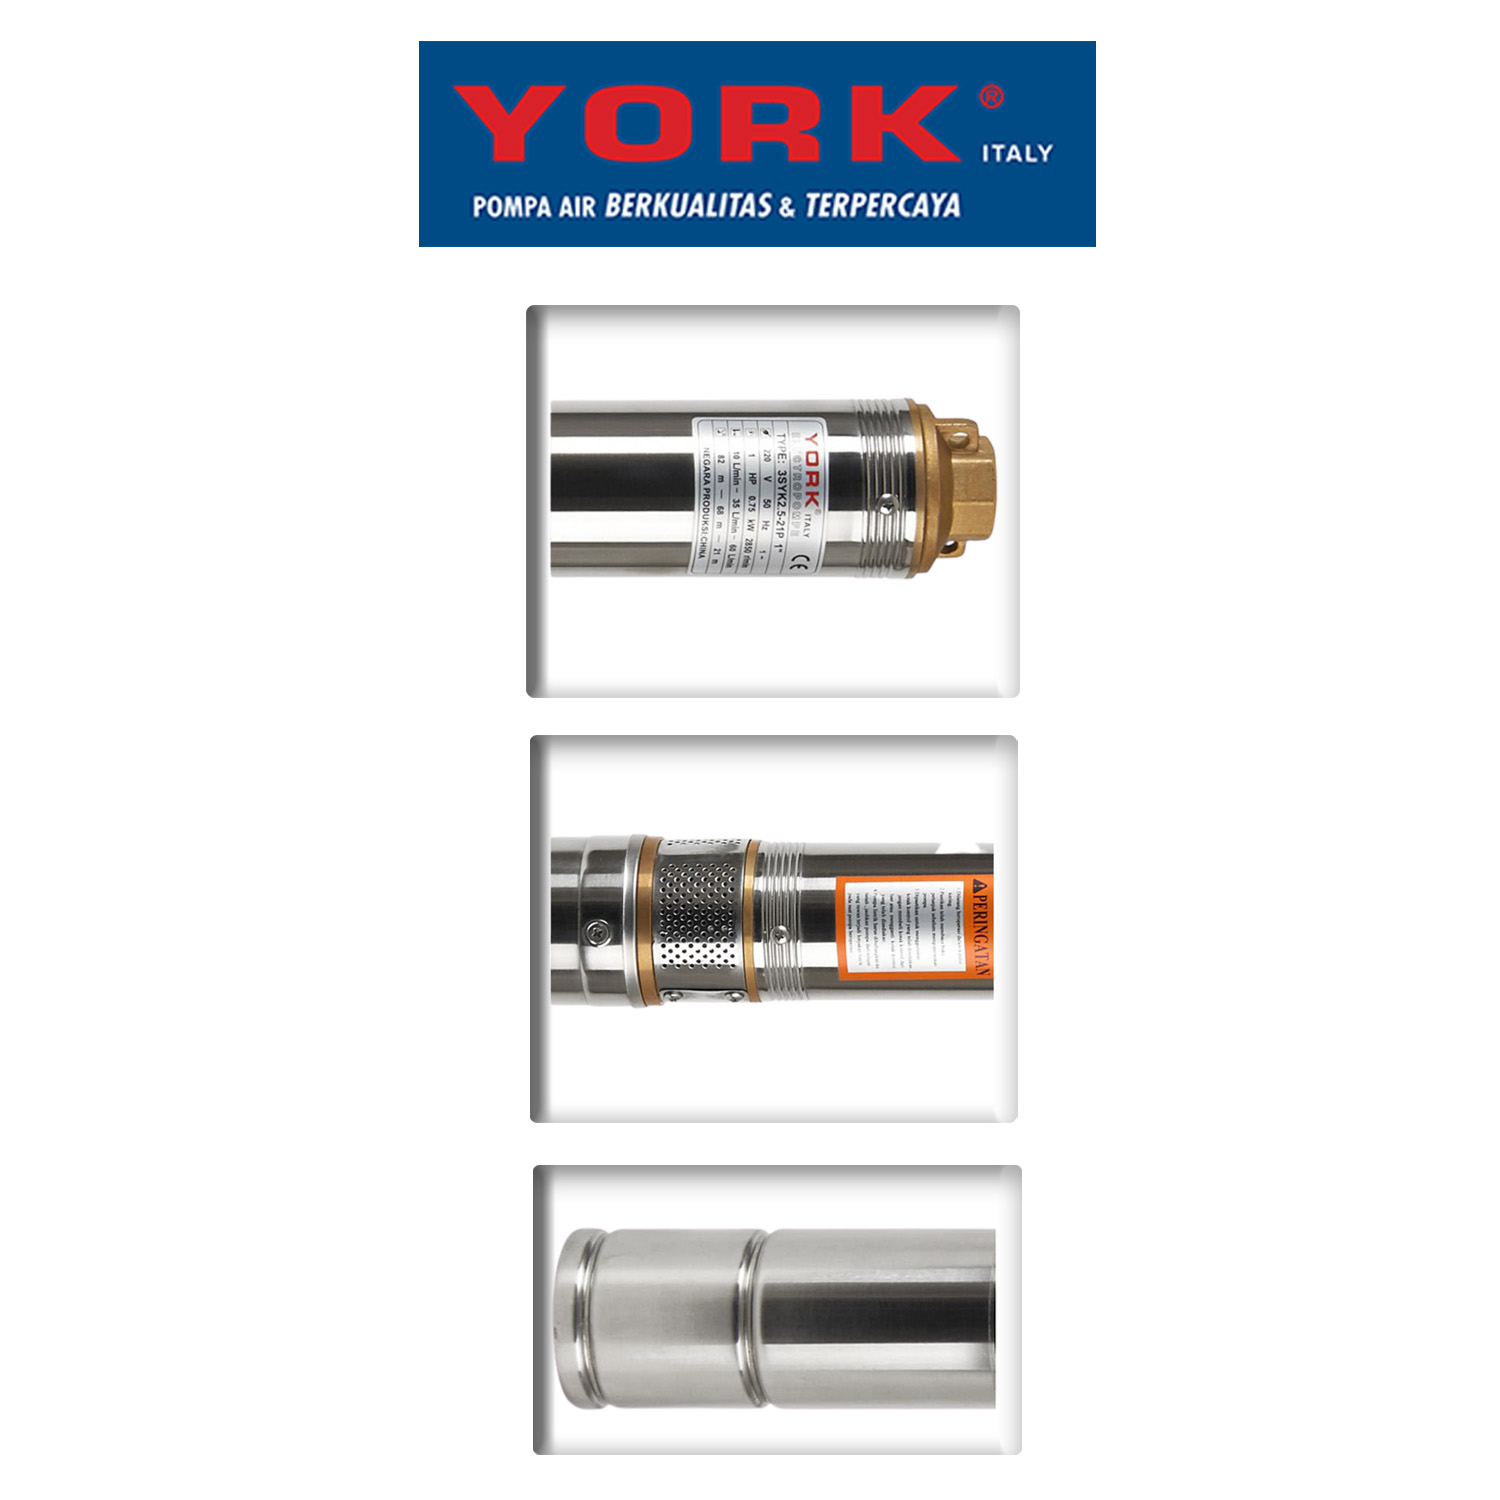 York 3SYK 2.5-11P (1/2 HP) + C.BOX + 40 M - Pompa Satelit 